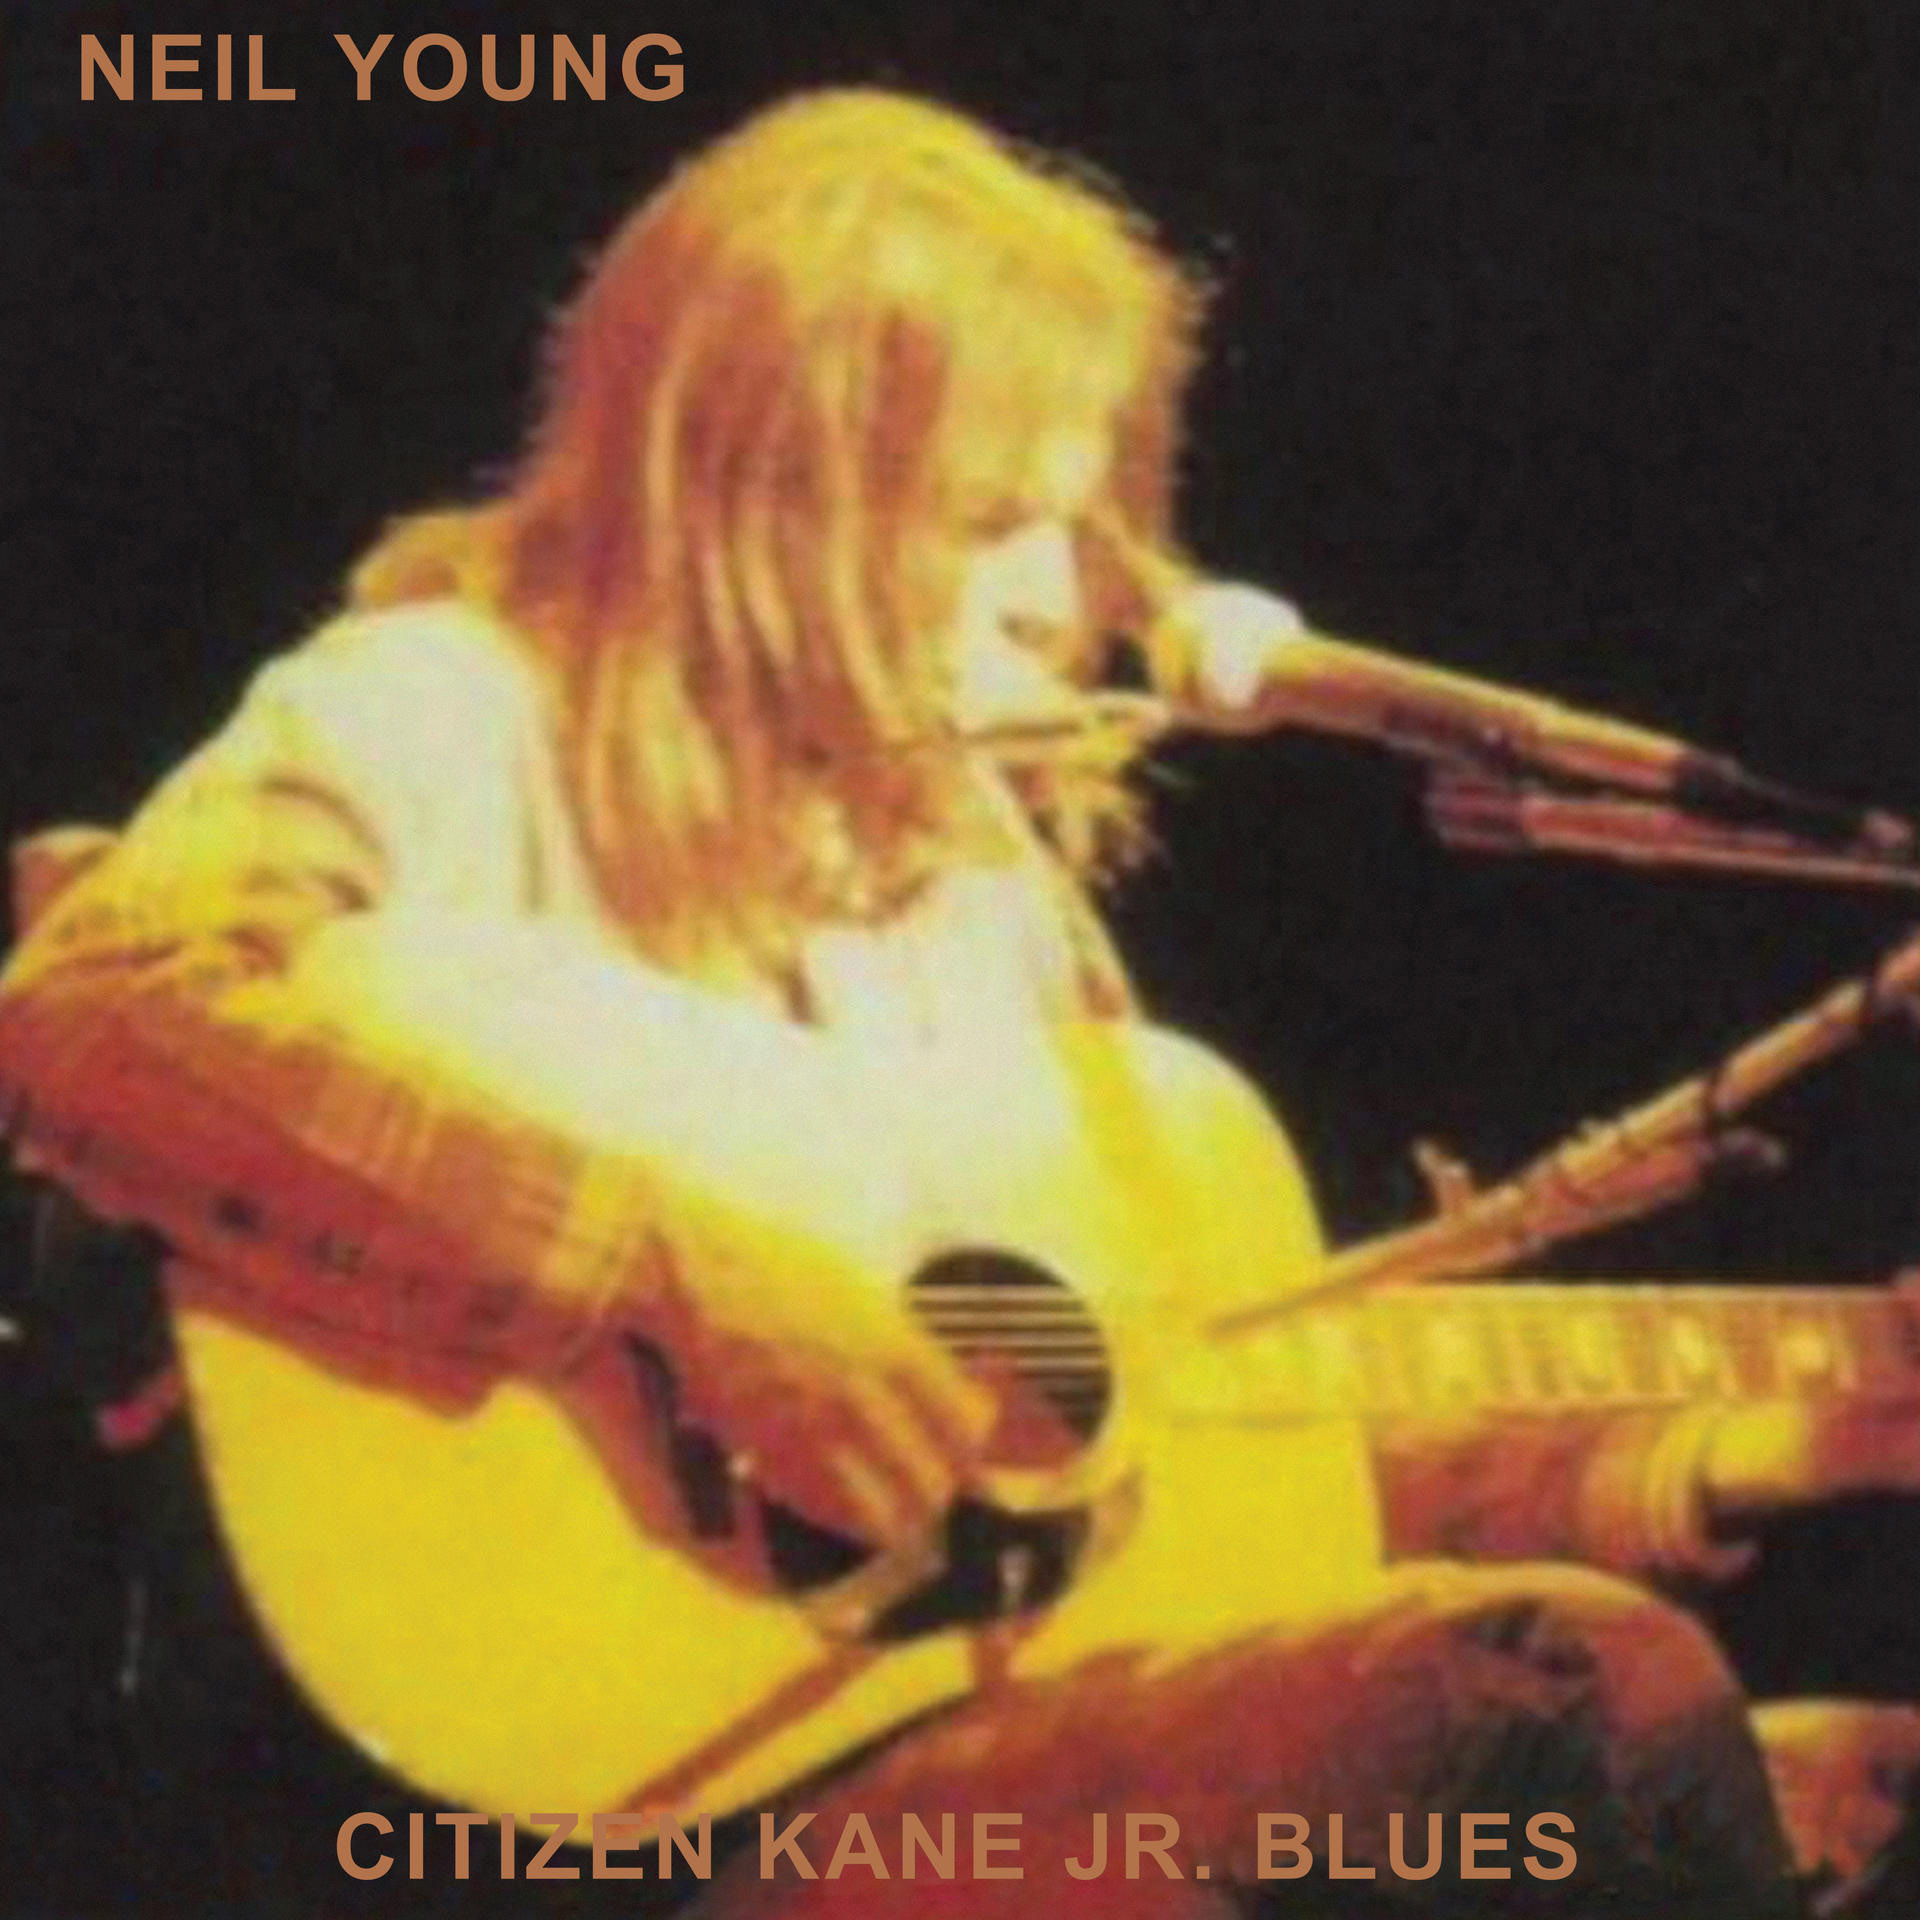 Neil Young - CITIZEN KANE BLUES JR. - (LIVE) (CD)